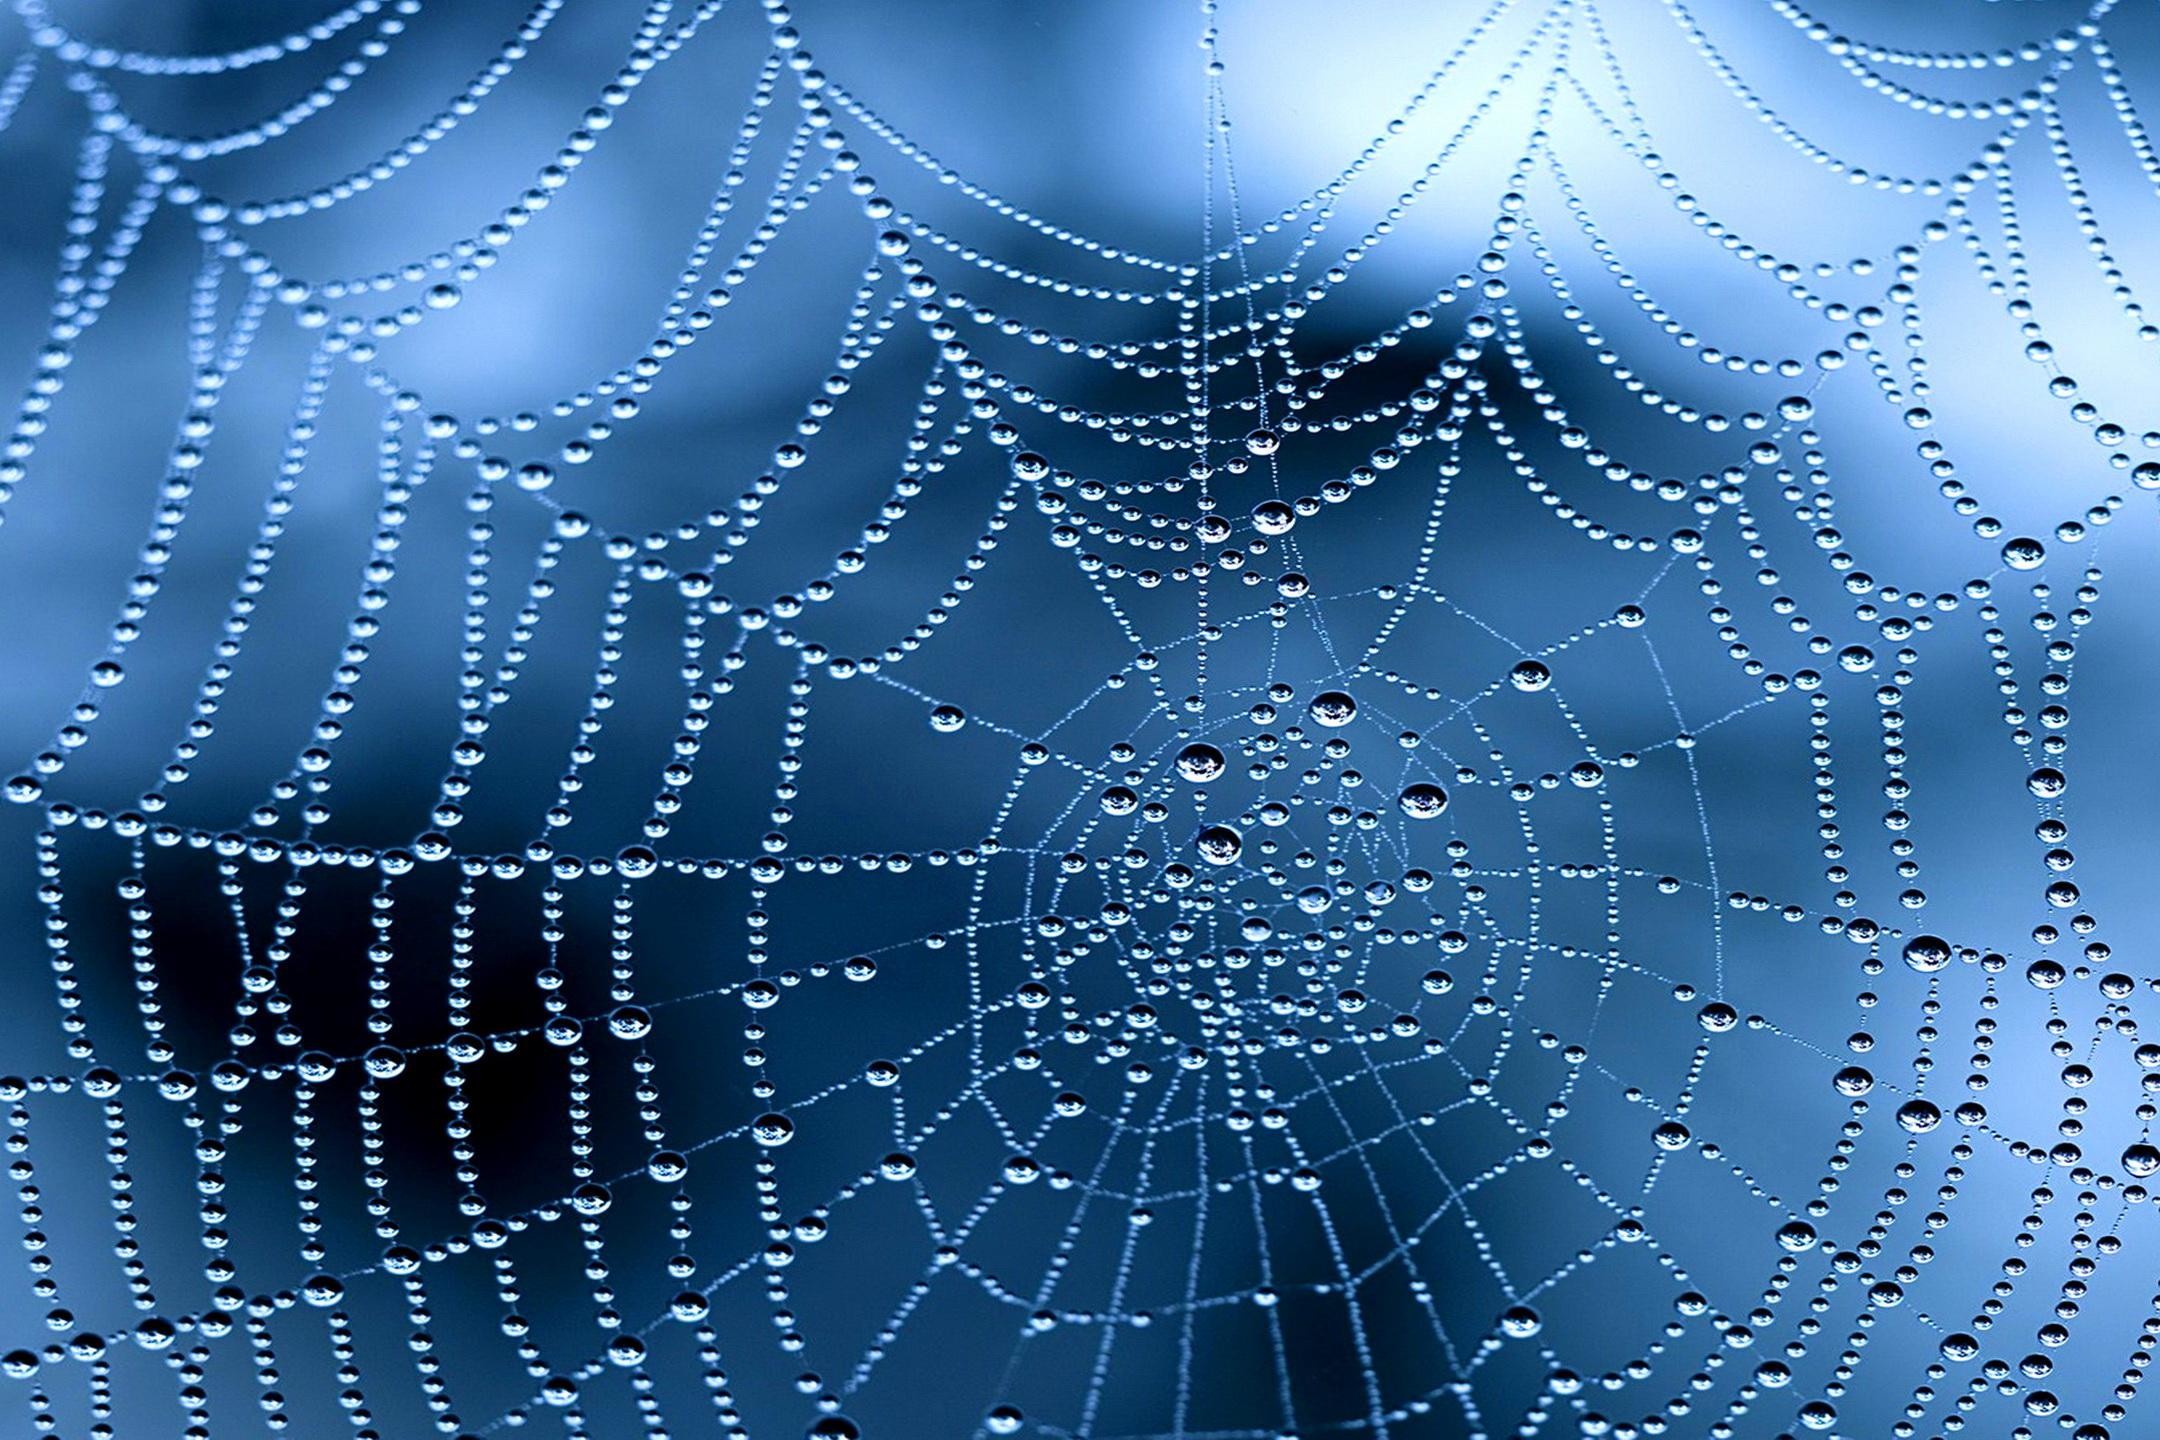 2160x1440 Morning Dew on Spider Web